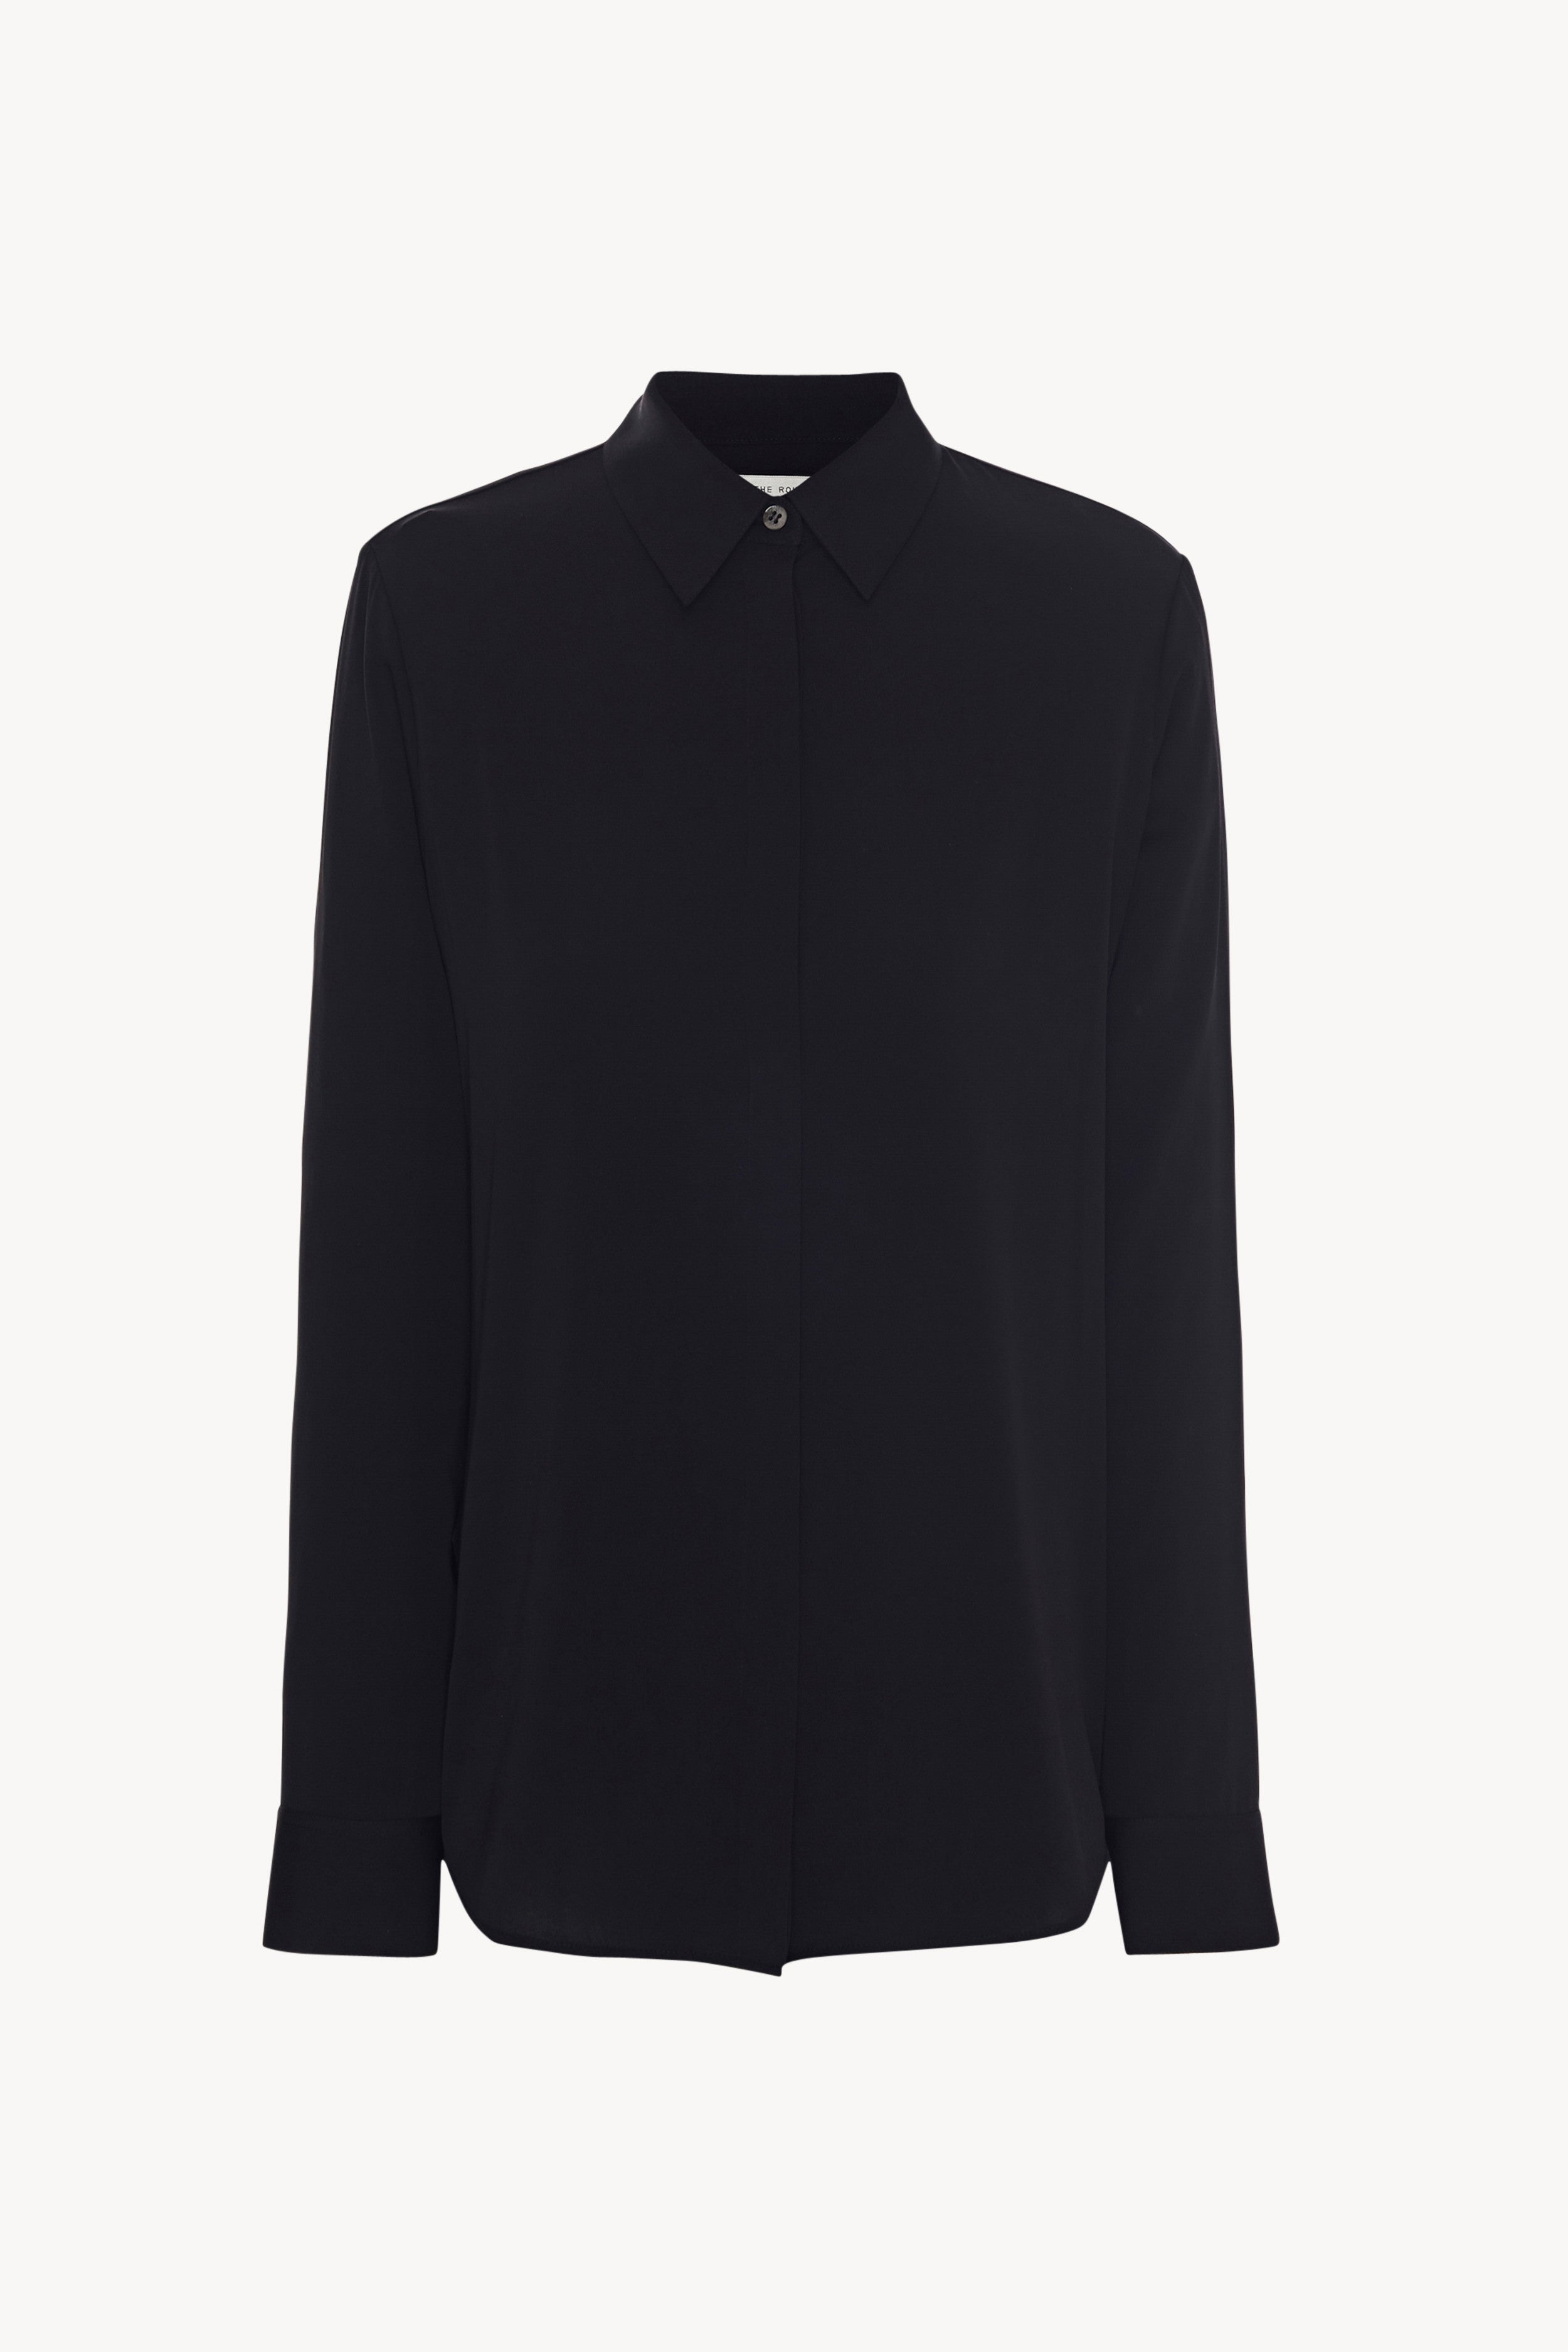 Petah Shirt Black in Stretch Silk – The Row